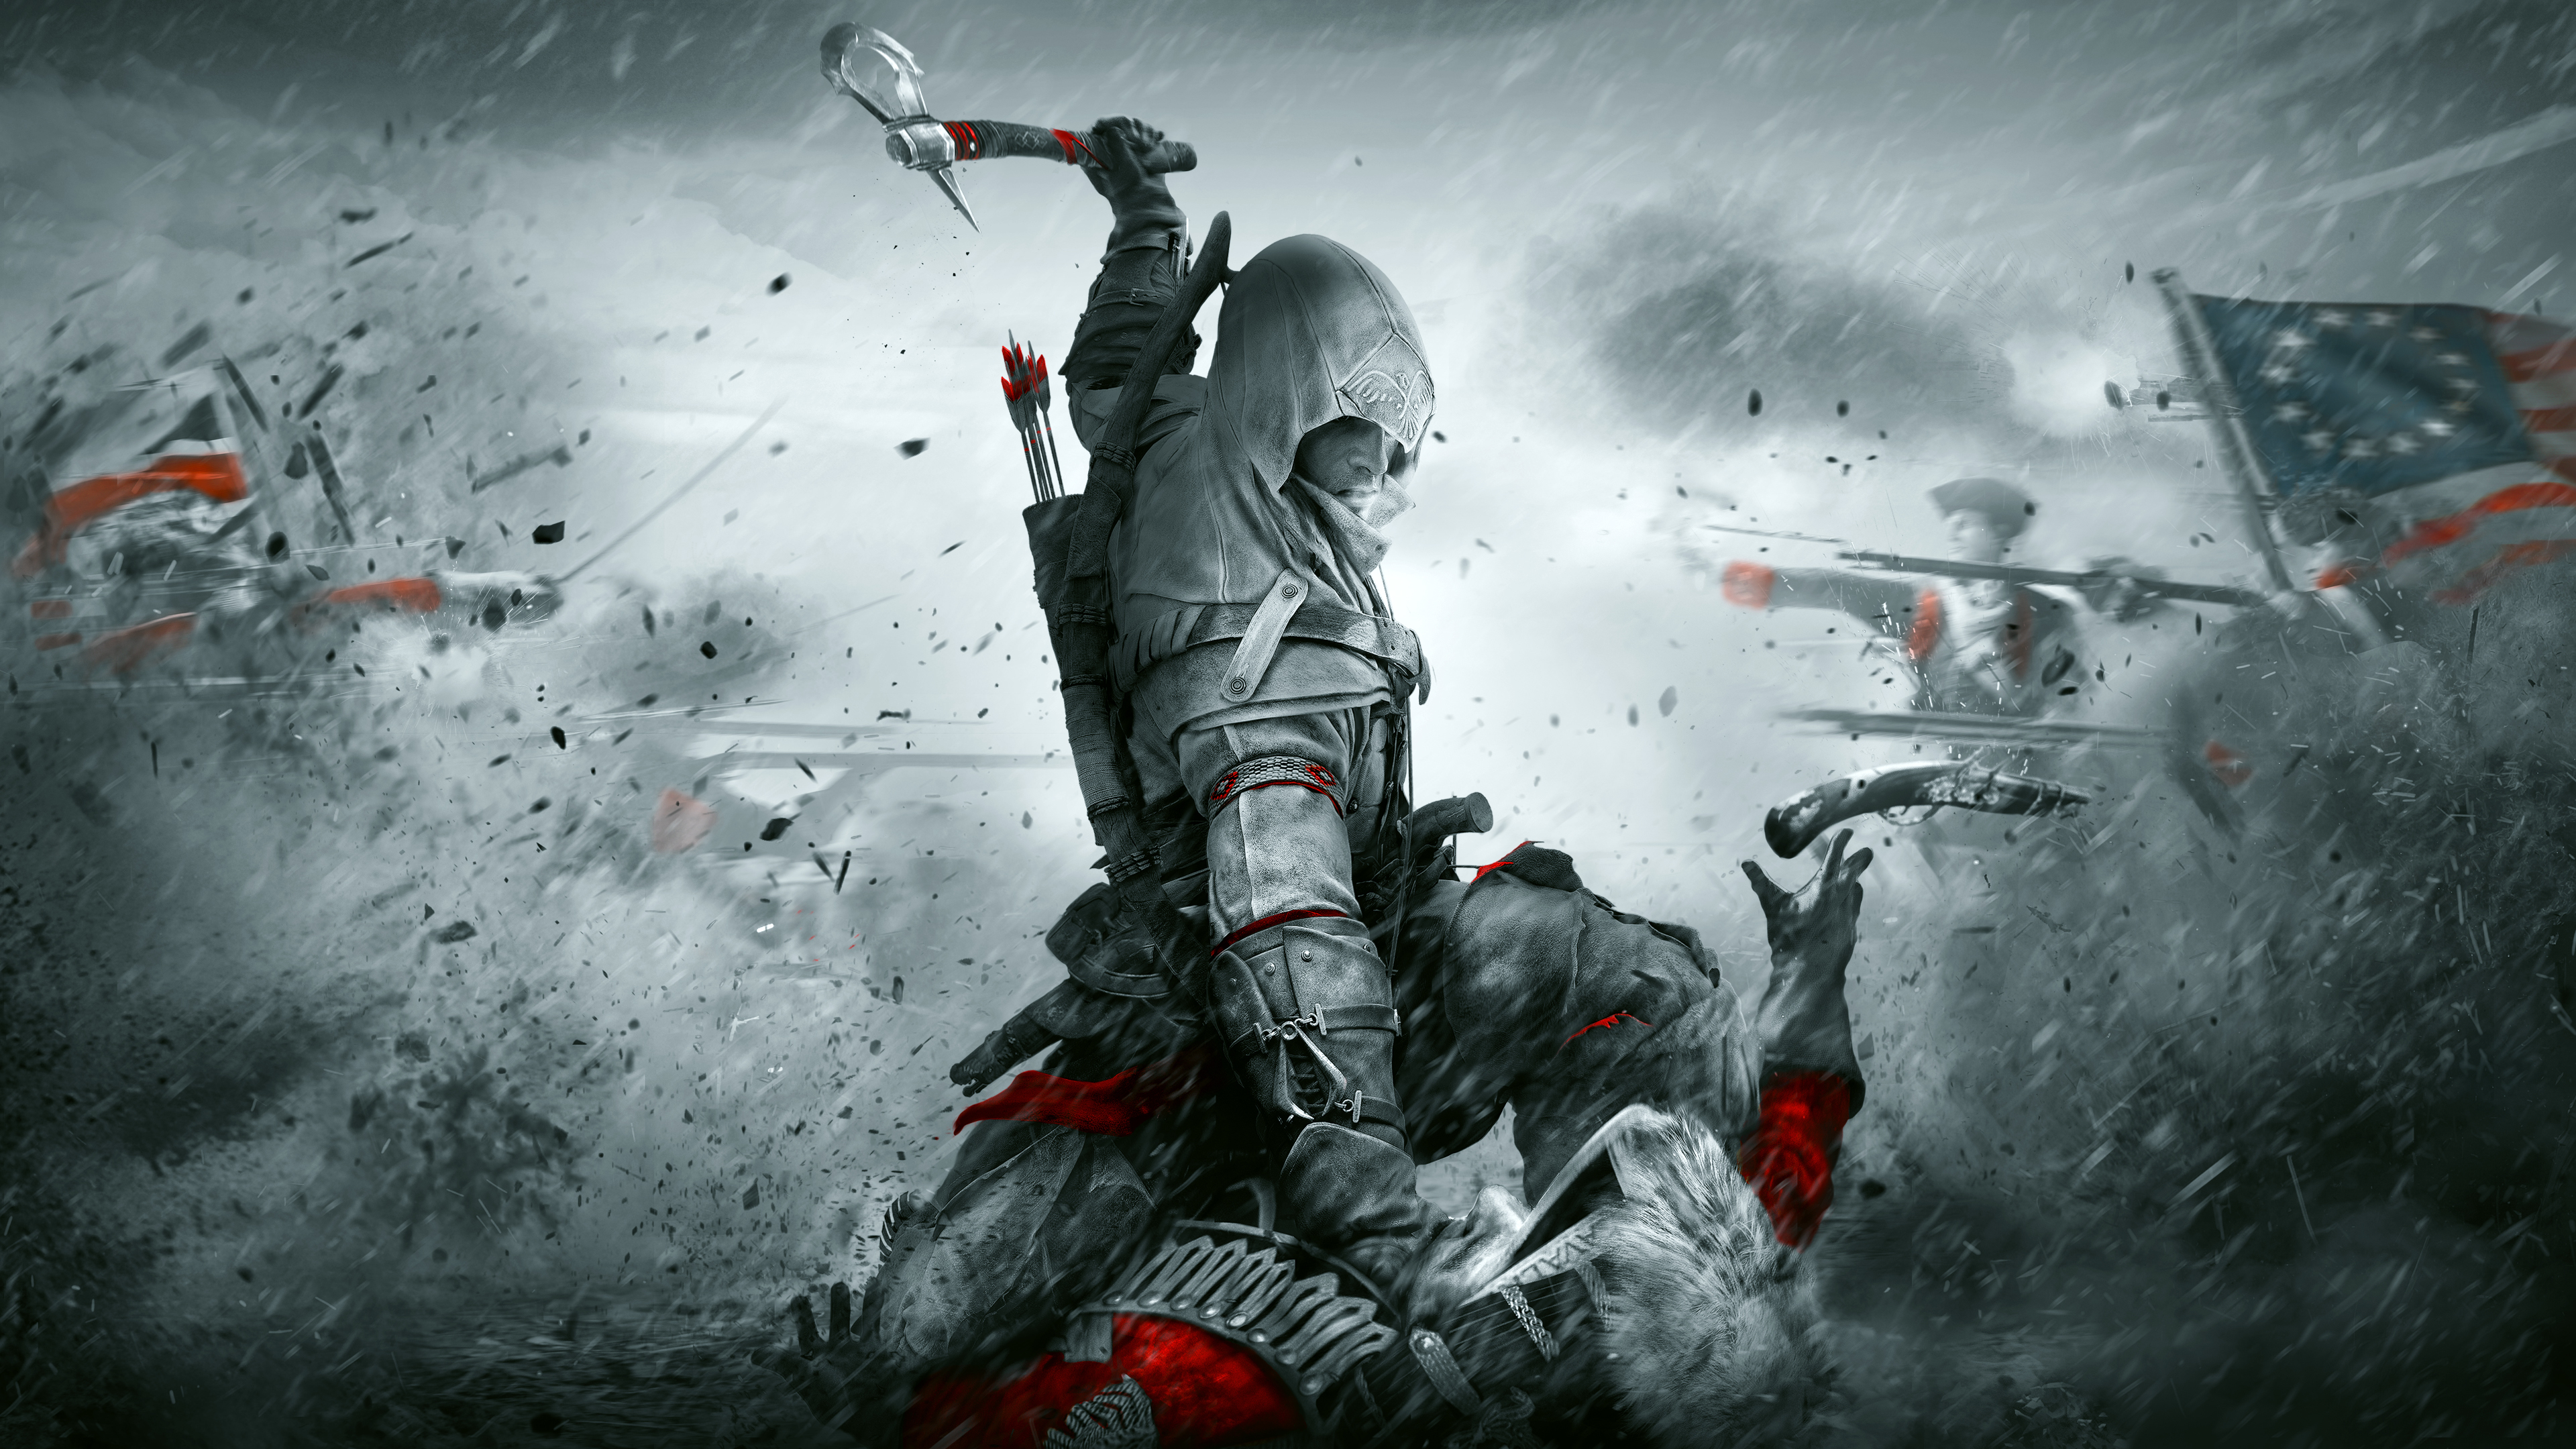 etikette Modregning bemærkning Assassin's Creed 3 Remaster Release Date Confirmed, But Not For Switch -  GameSpot